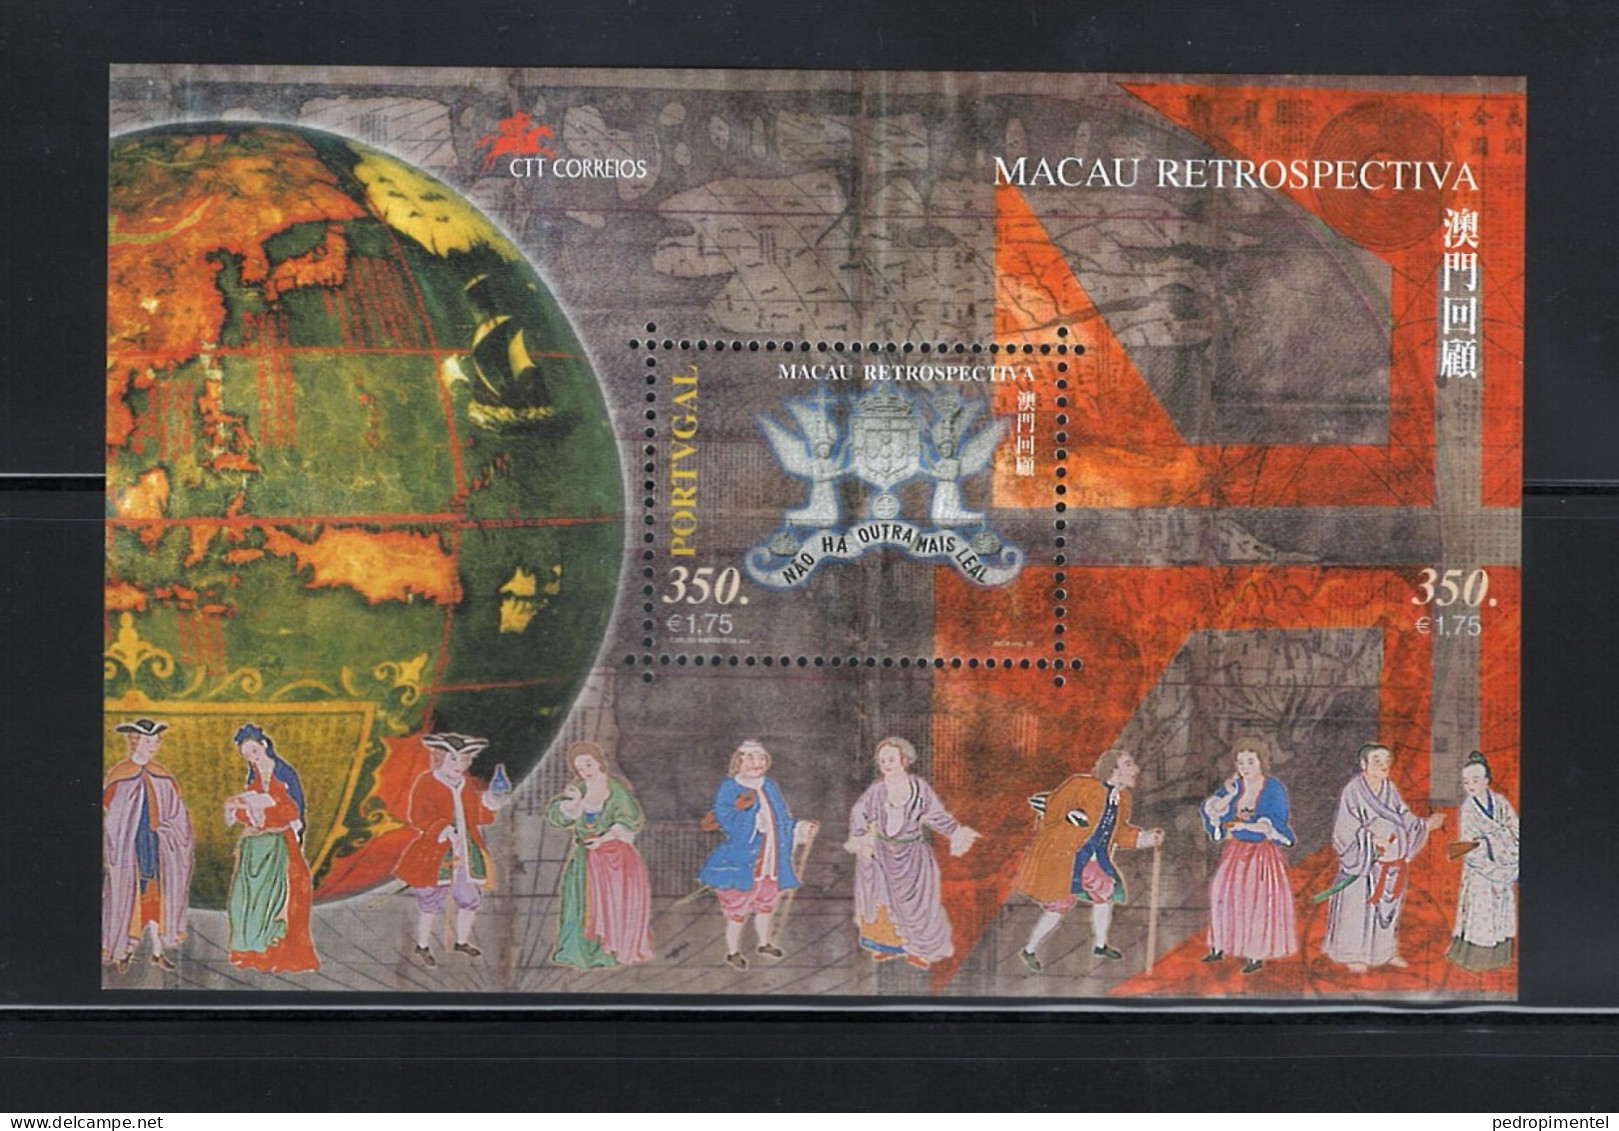 Portugal Stamps 1999 "Macau Retrospective" Condition MNH Minisheet #2639 - Ongebruikt